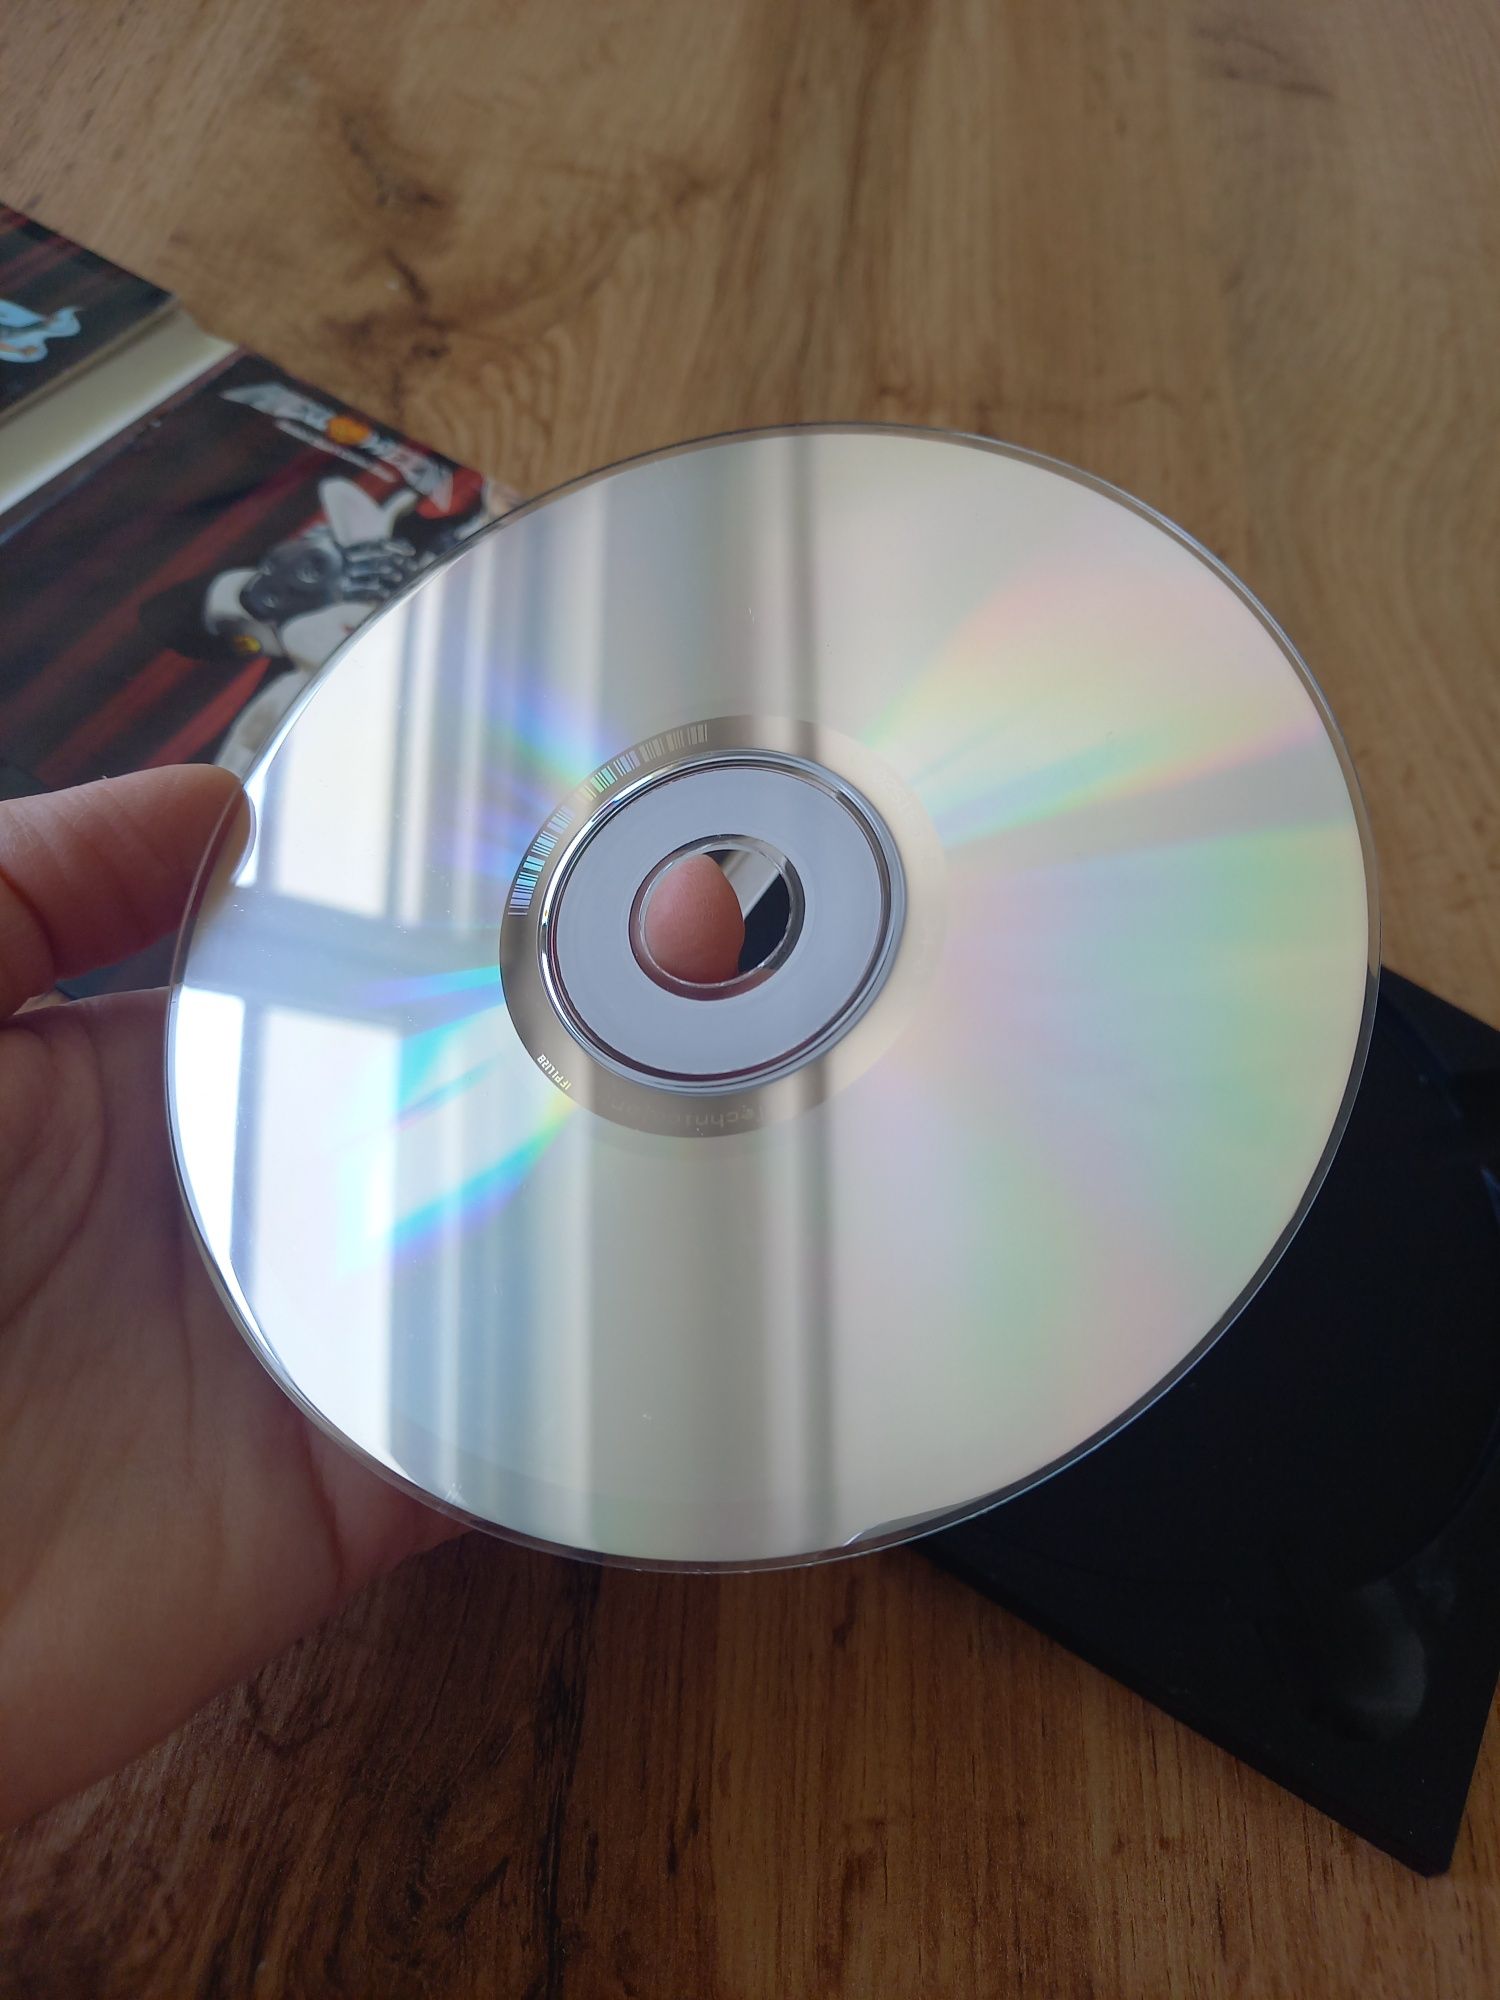 Płyta CD Helloween  - Rabbit don't come easy